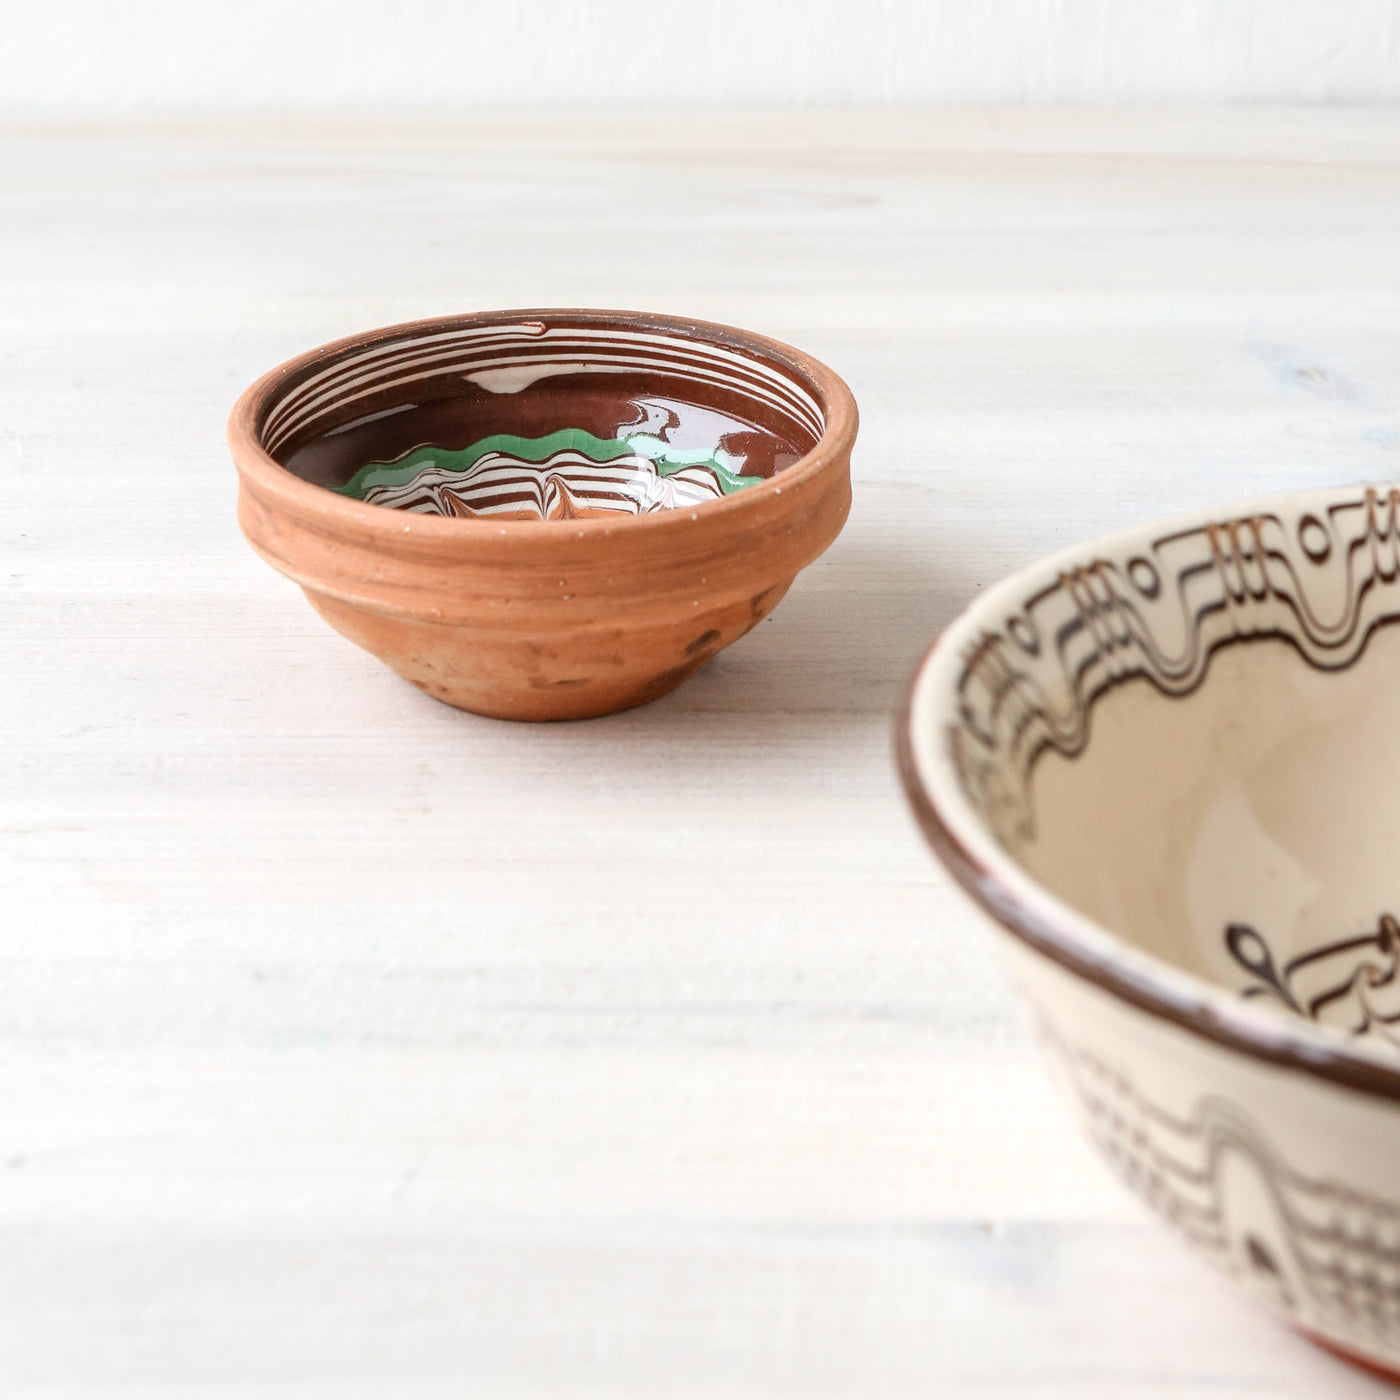 10cm Horezu Stoneware Mini Serving Bowl - Turquoise & Orange